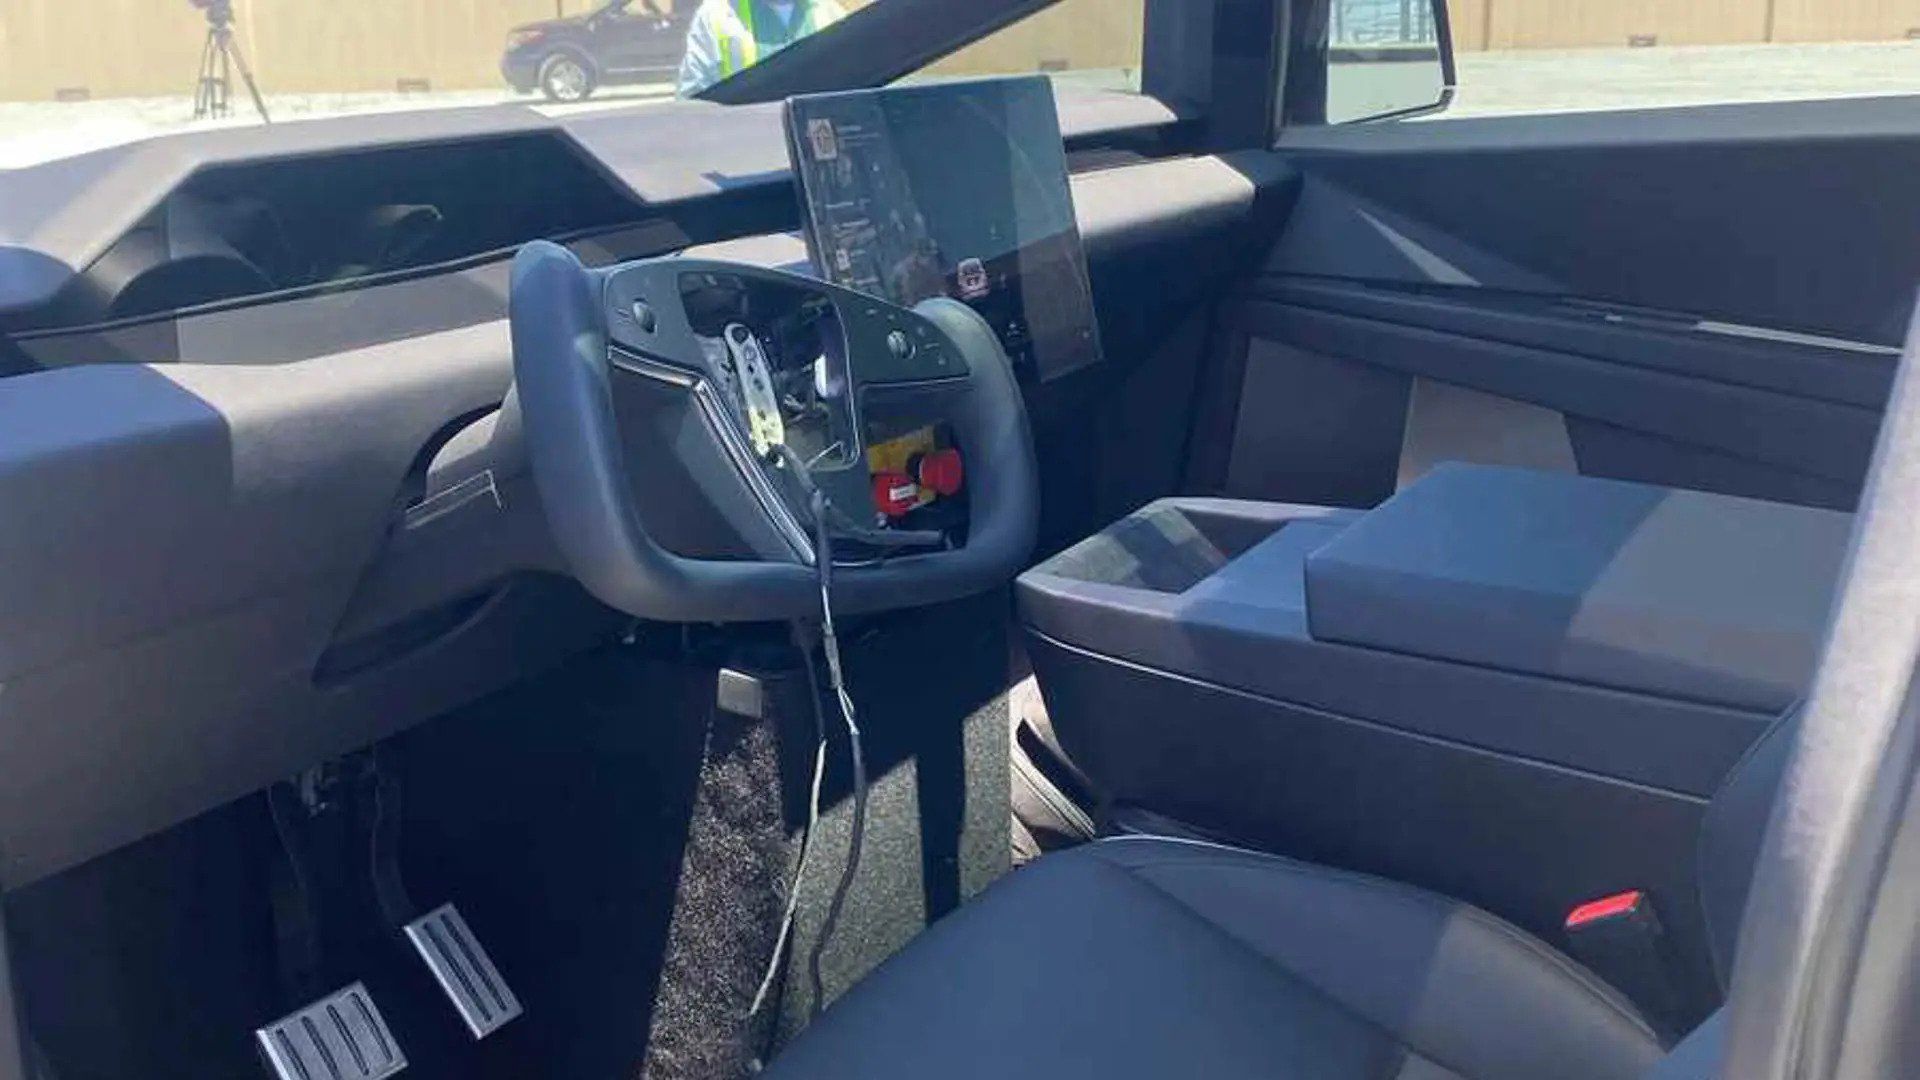 Tesla prototype Cybertruck's interior revealed in new photos Driving